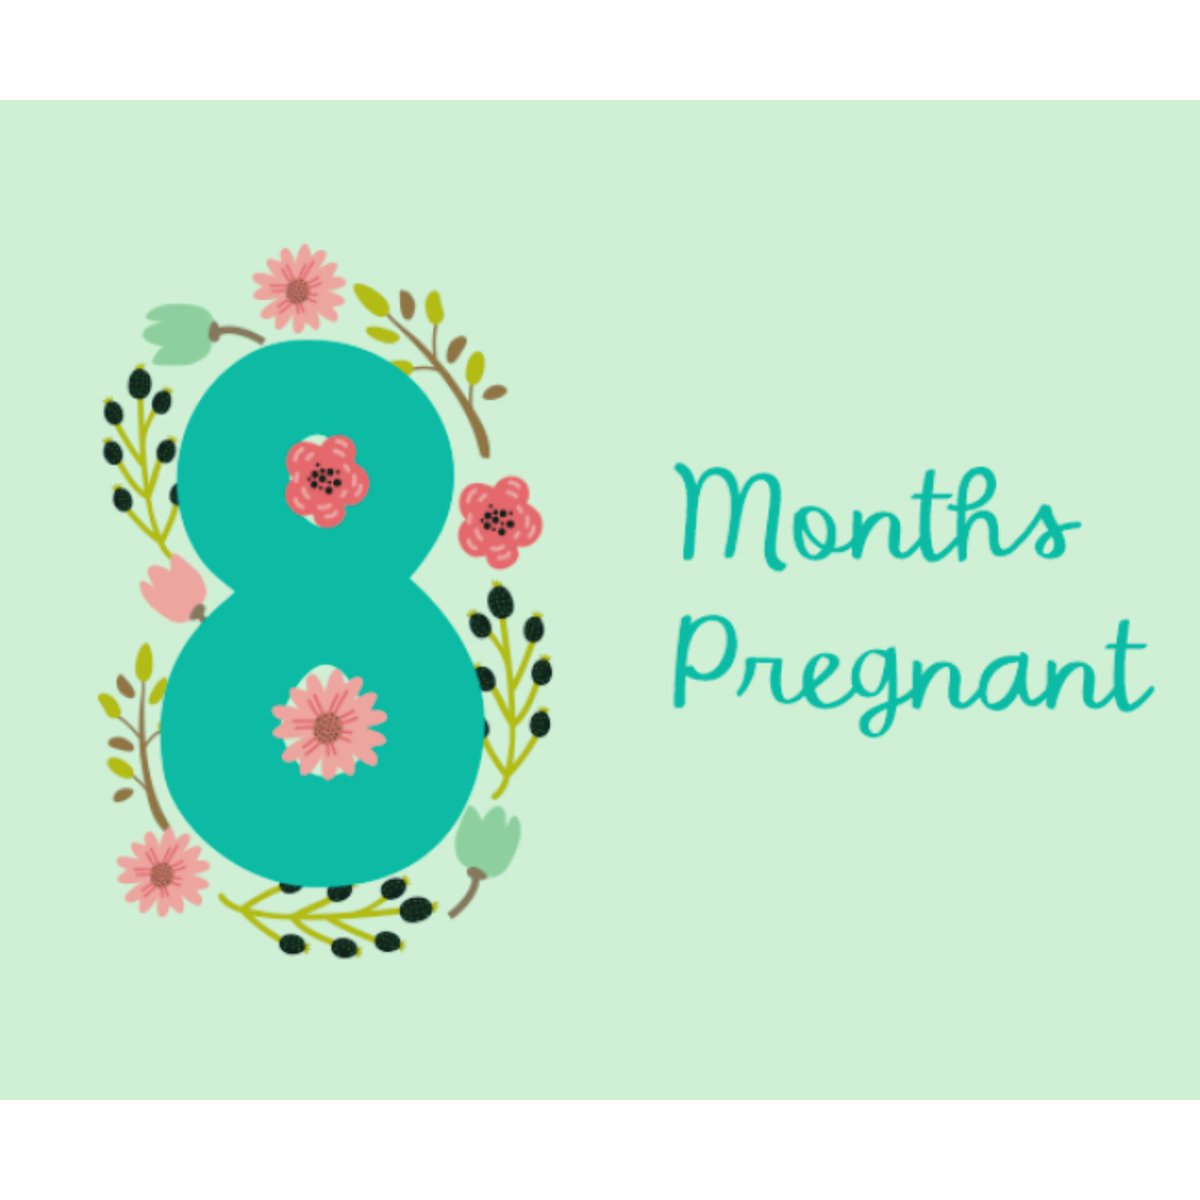 Baby 4 🤍👶🤰🏻
#VitaDaMamma▪️#Pregnant▪️#Pregnancy